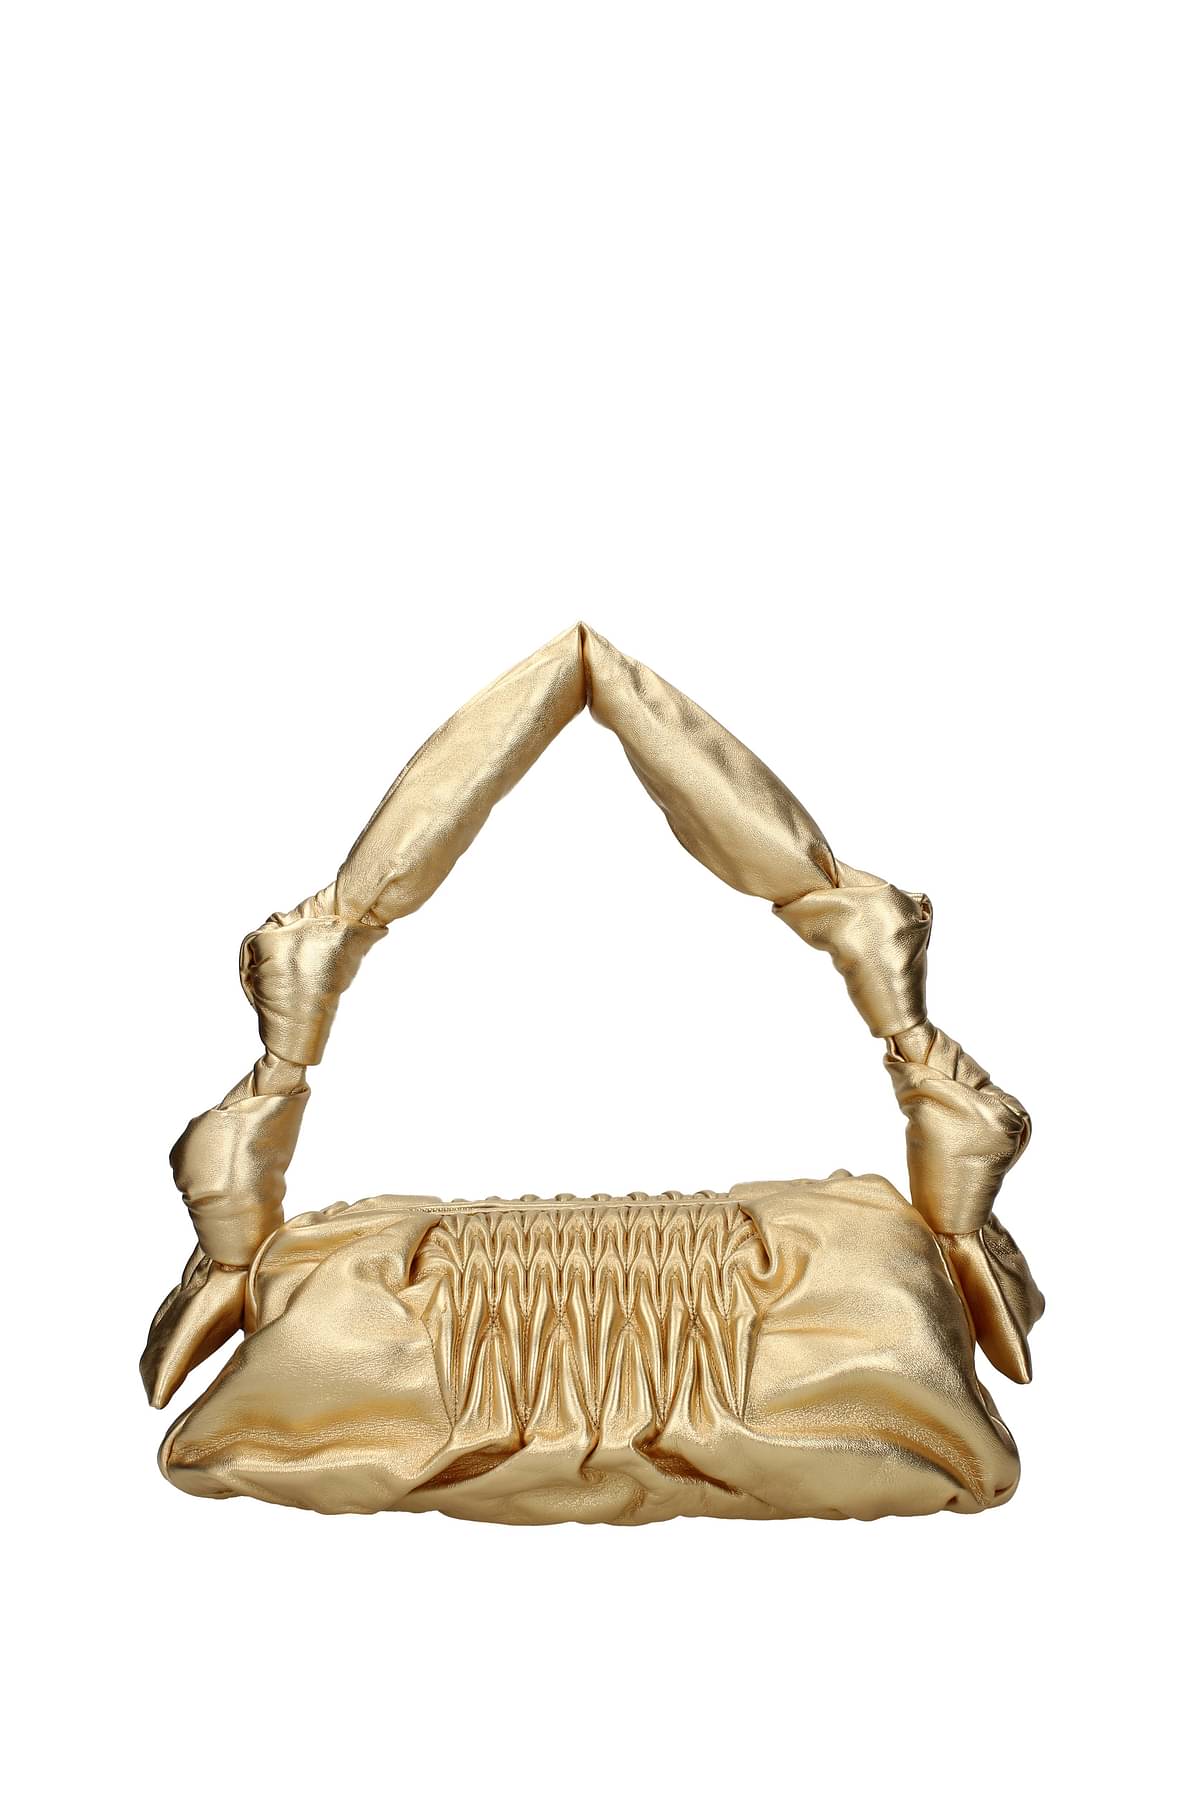 Miu Miu Shoulder bags Women 5BF0972C9PF0522 Leather Gold 787,5€